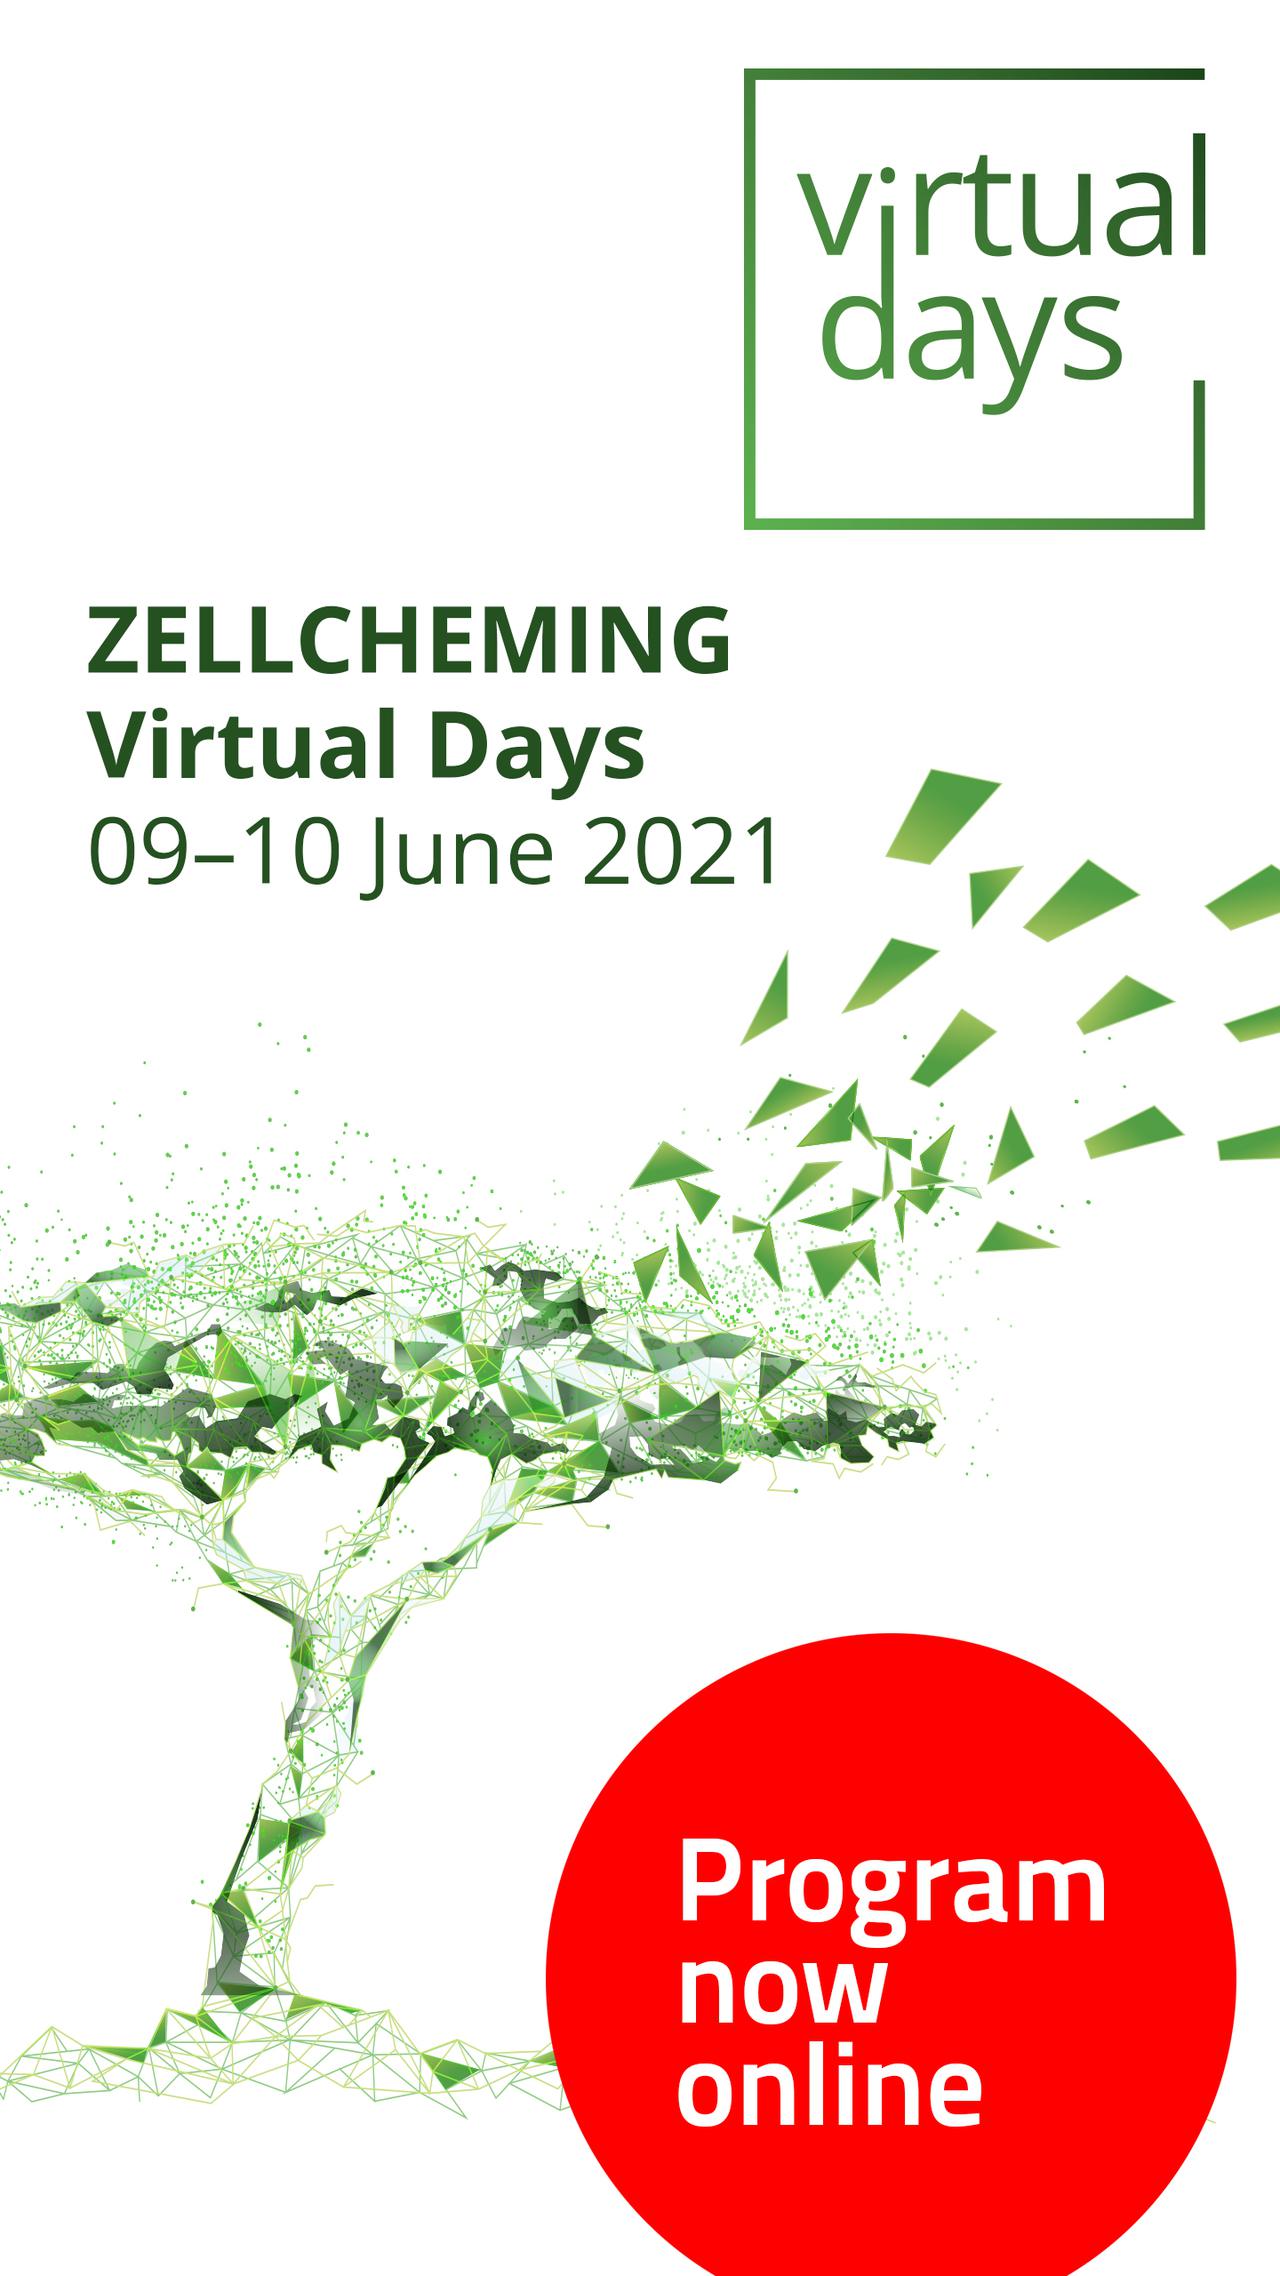 Zellcheming Virtual Days